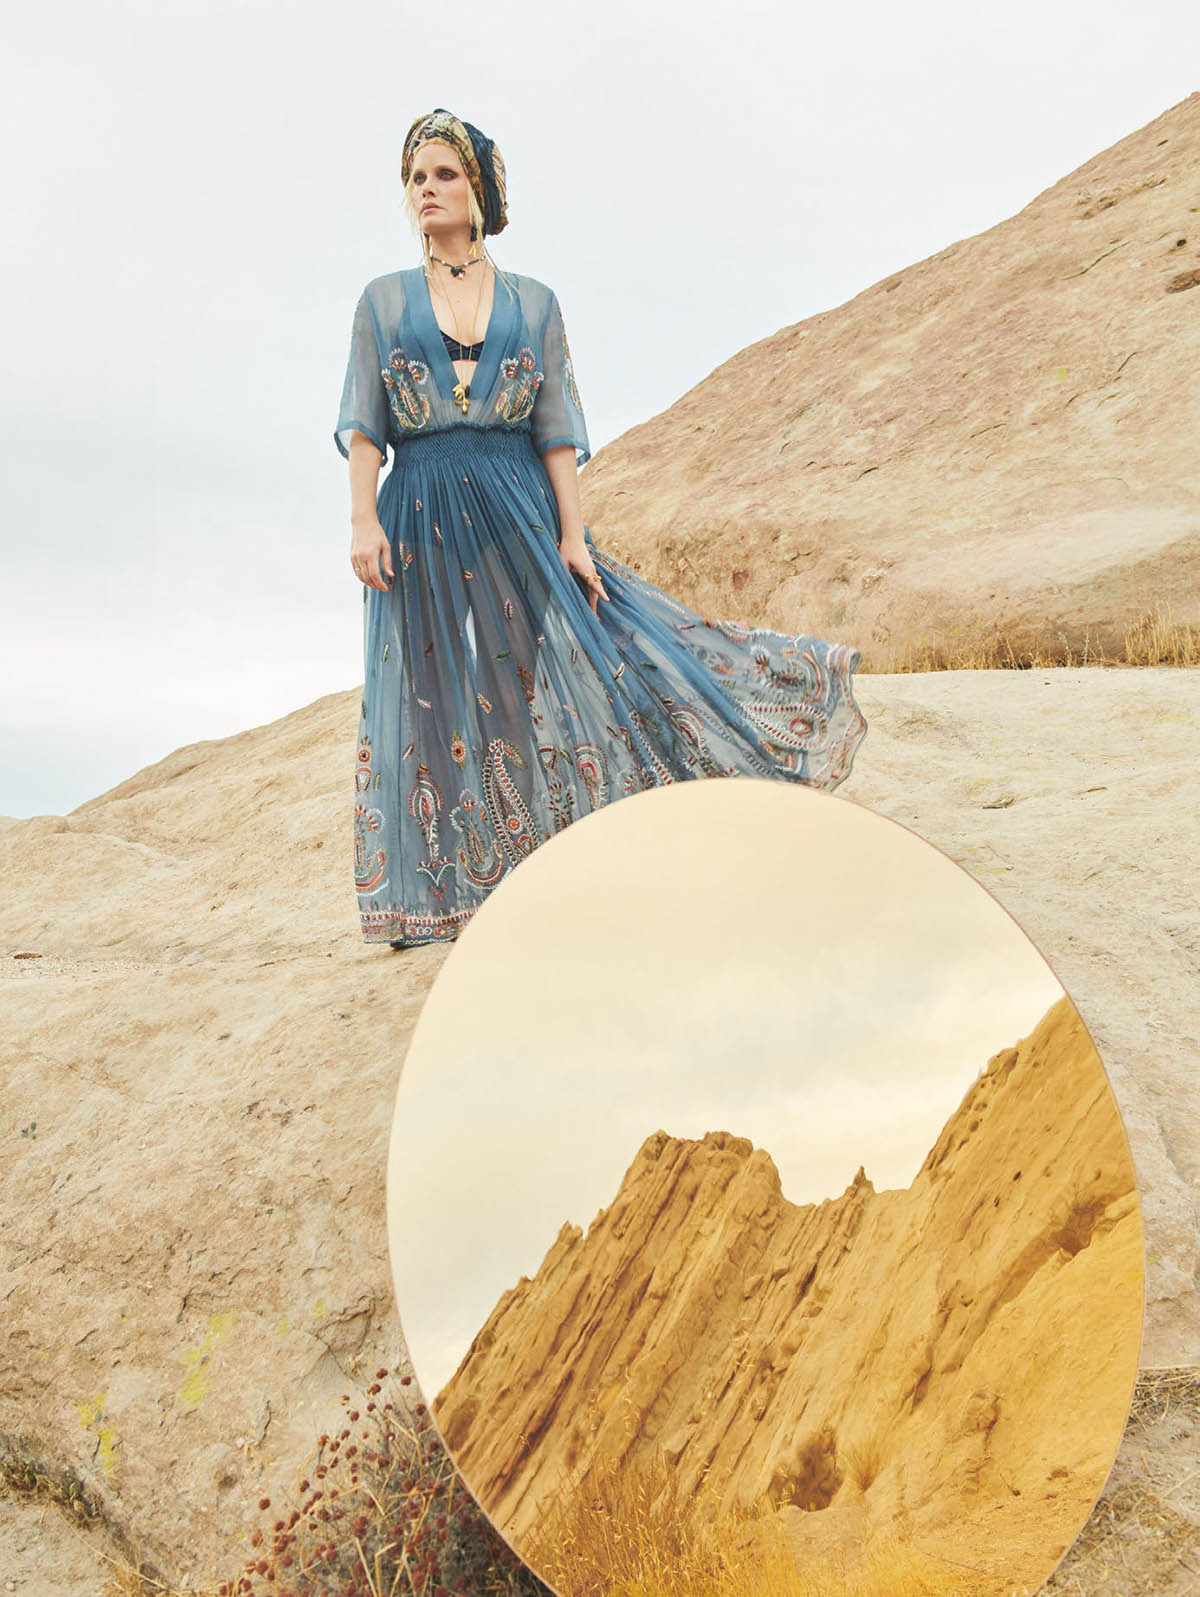 Amber Valletta by Craig McDean for British Vogue April 2021